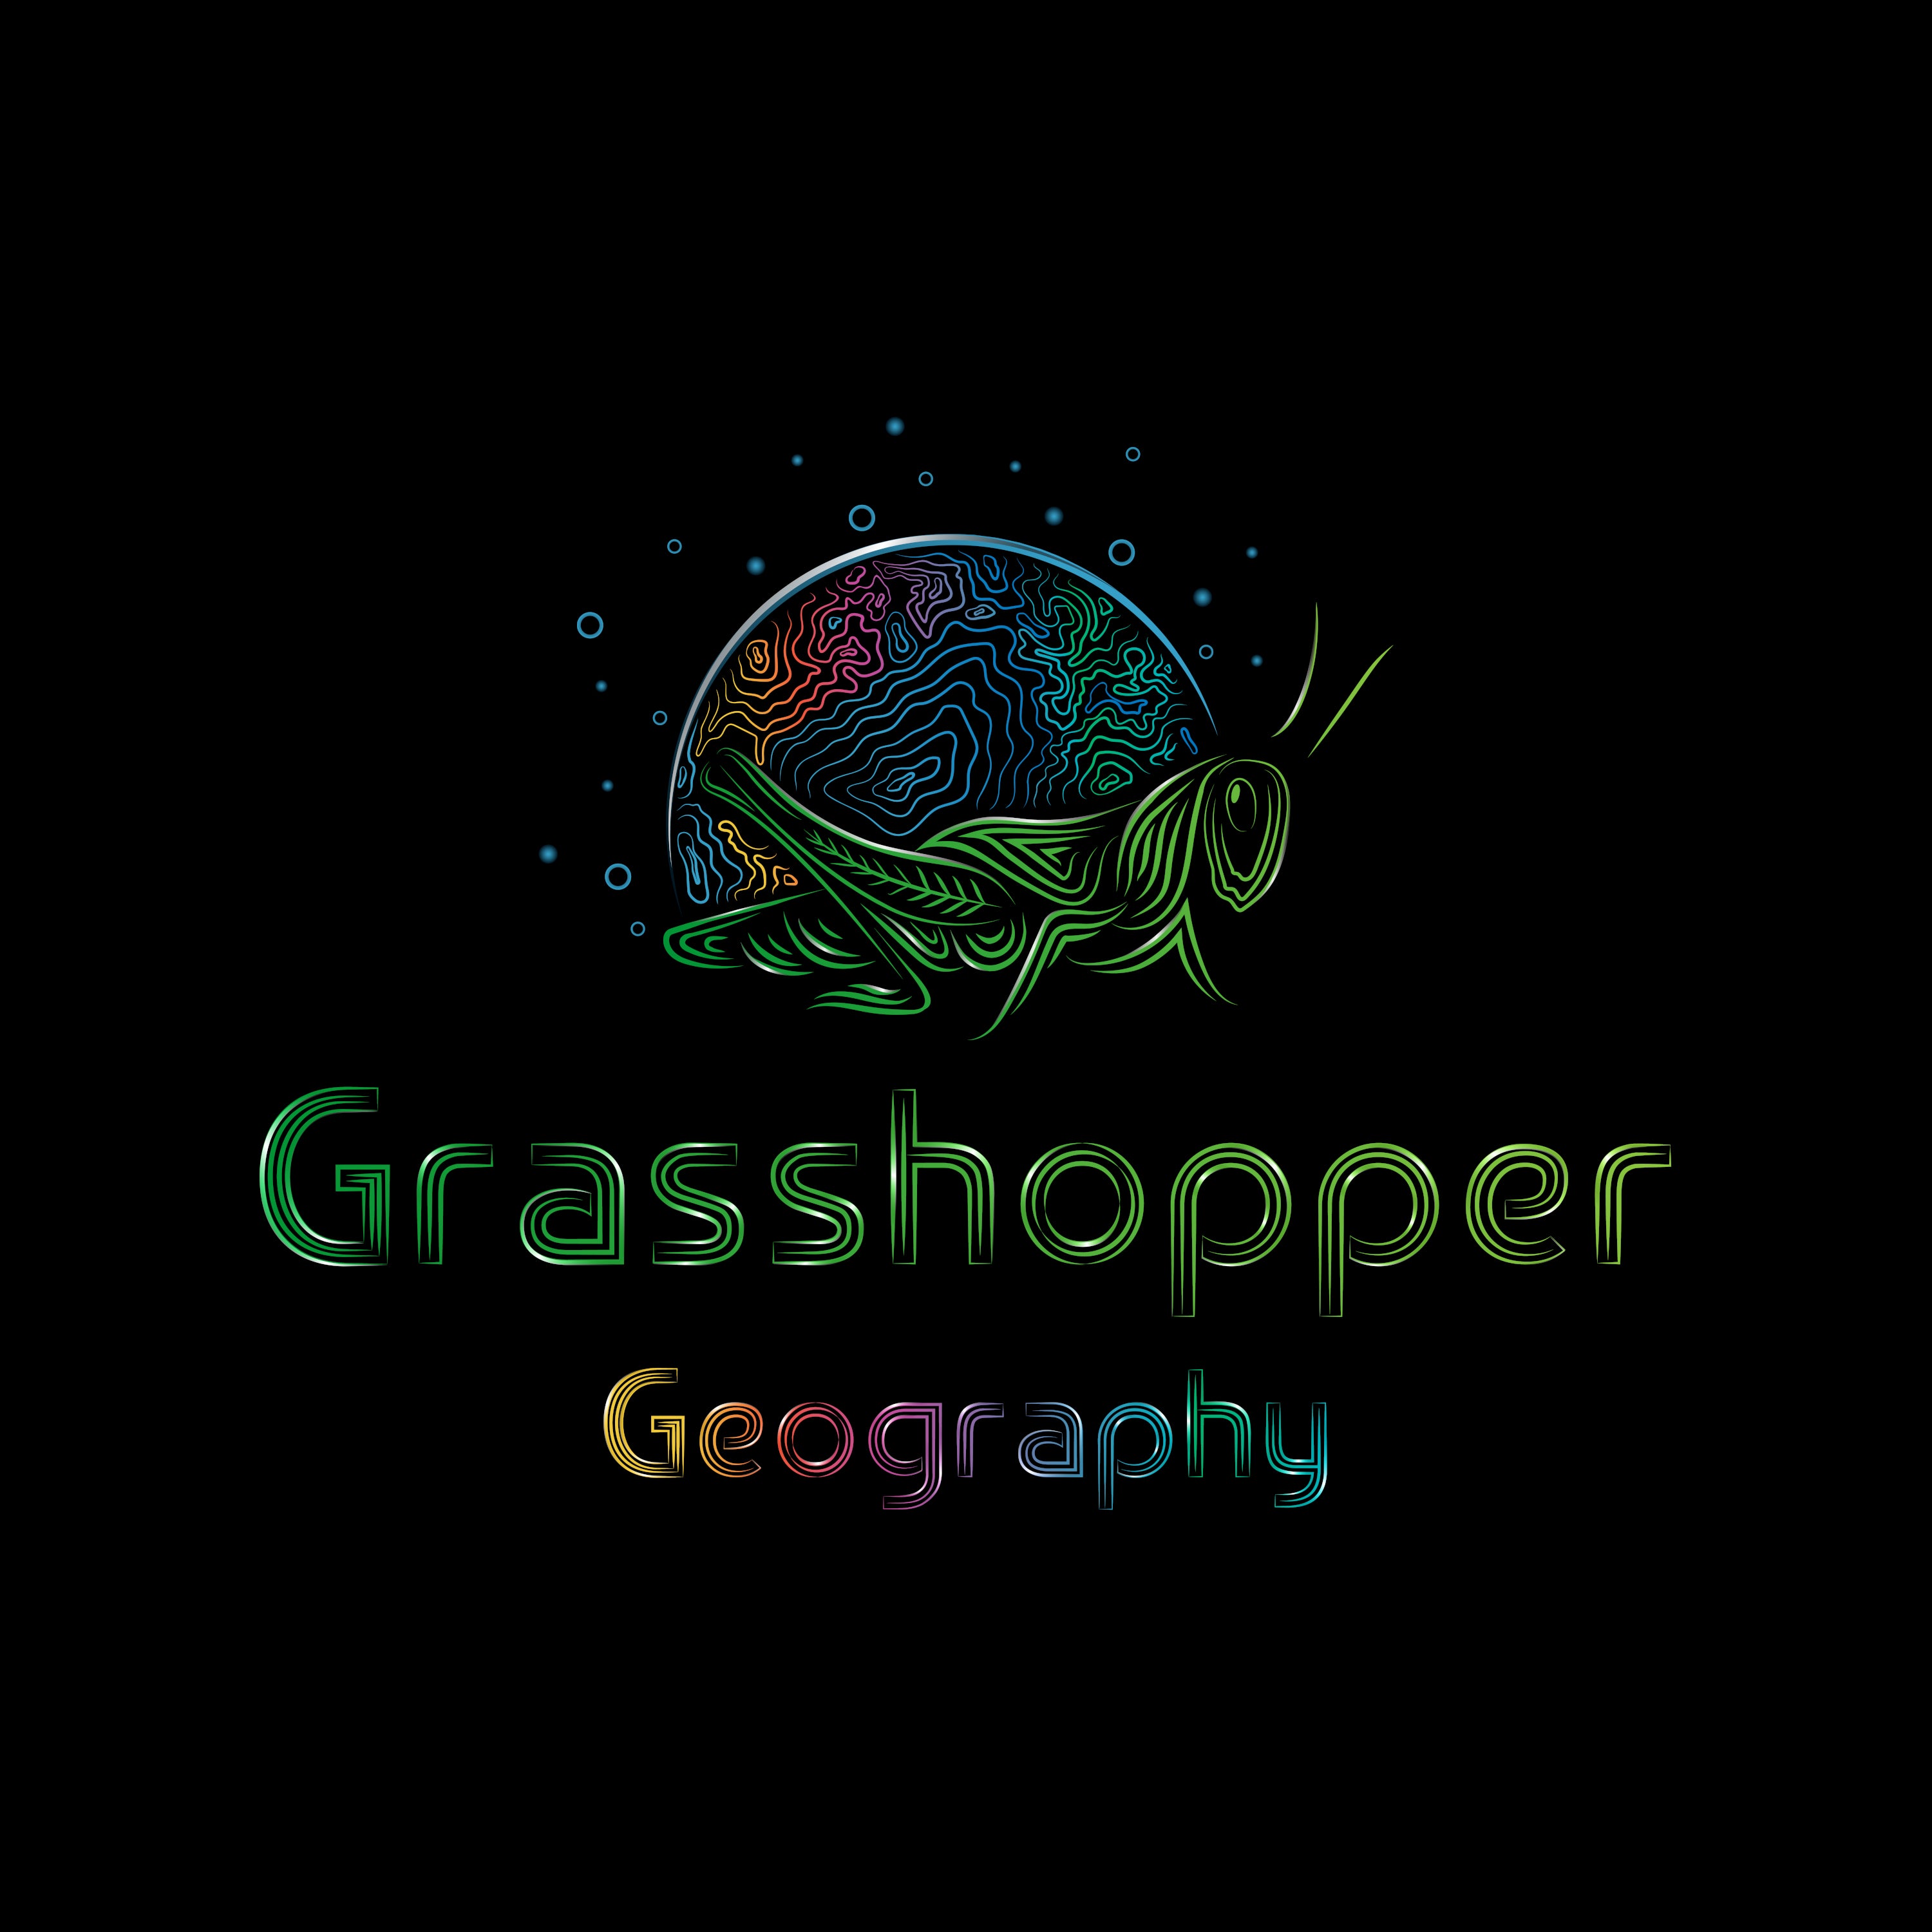 Grasshopper Geography Logo